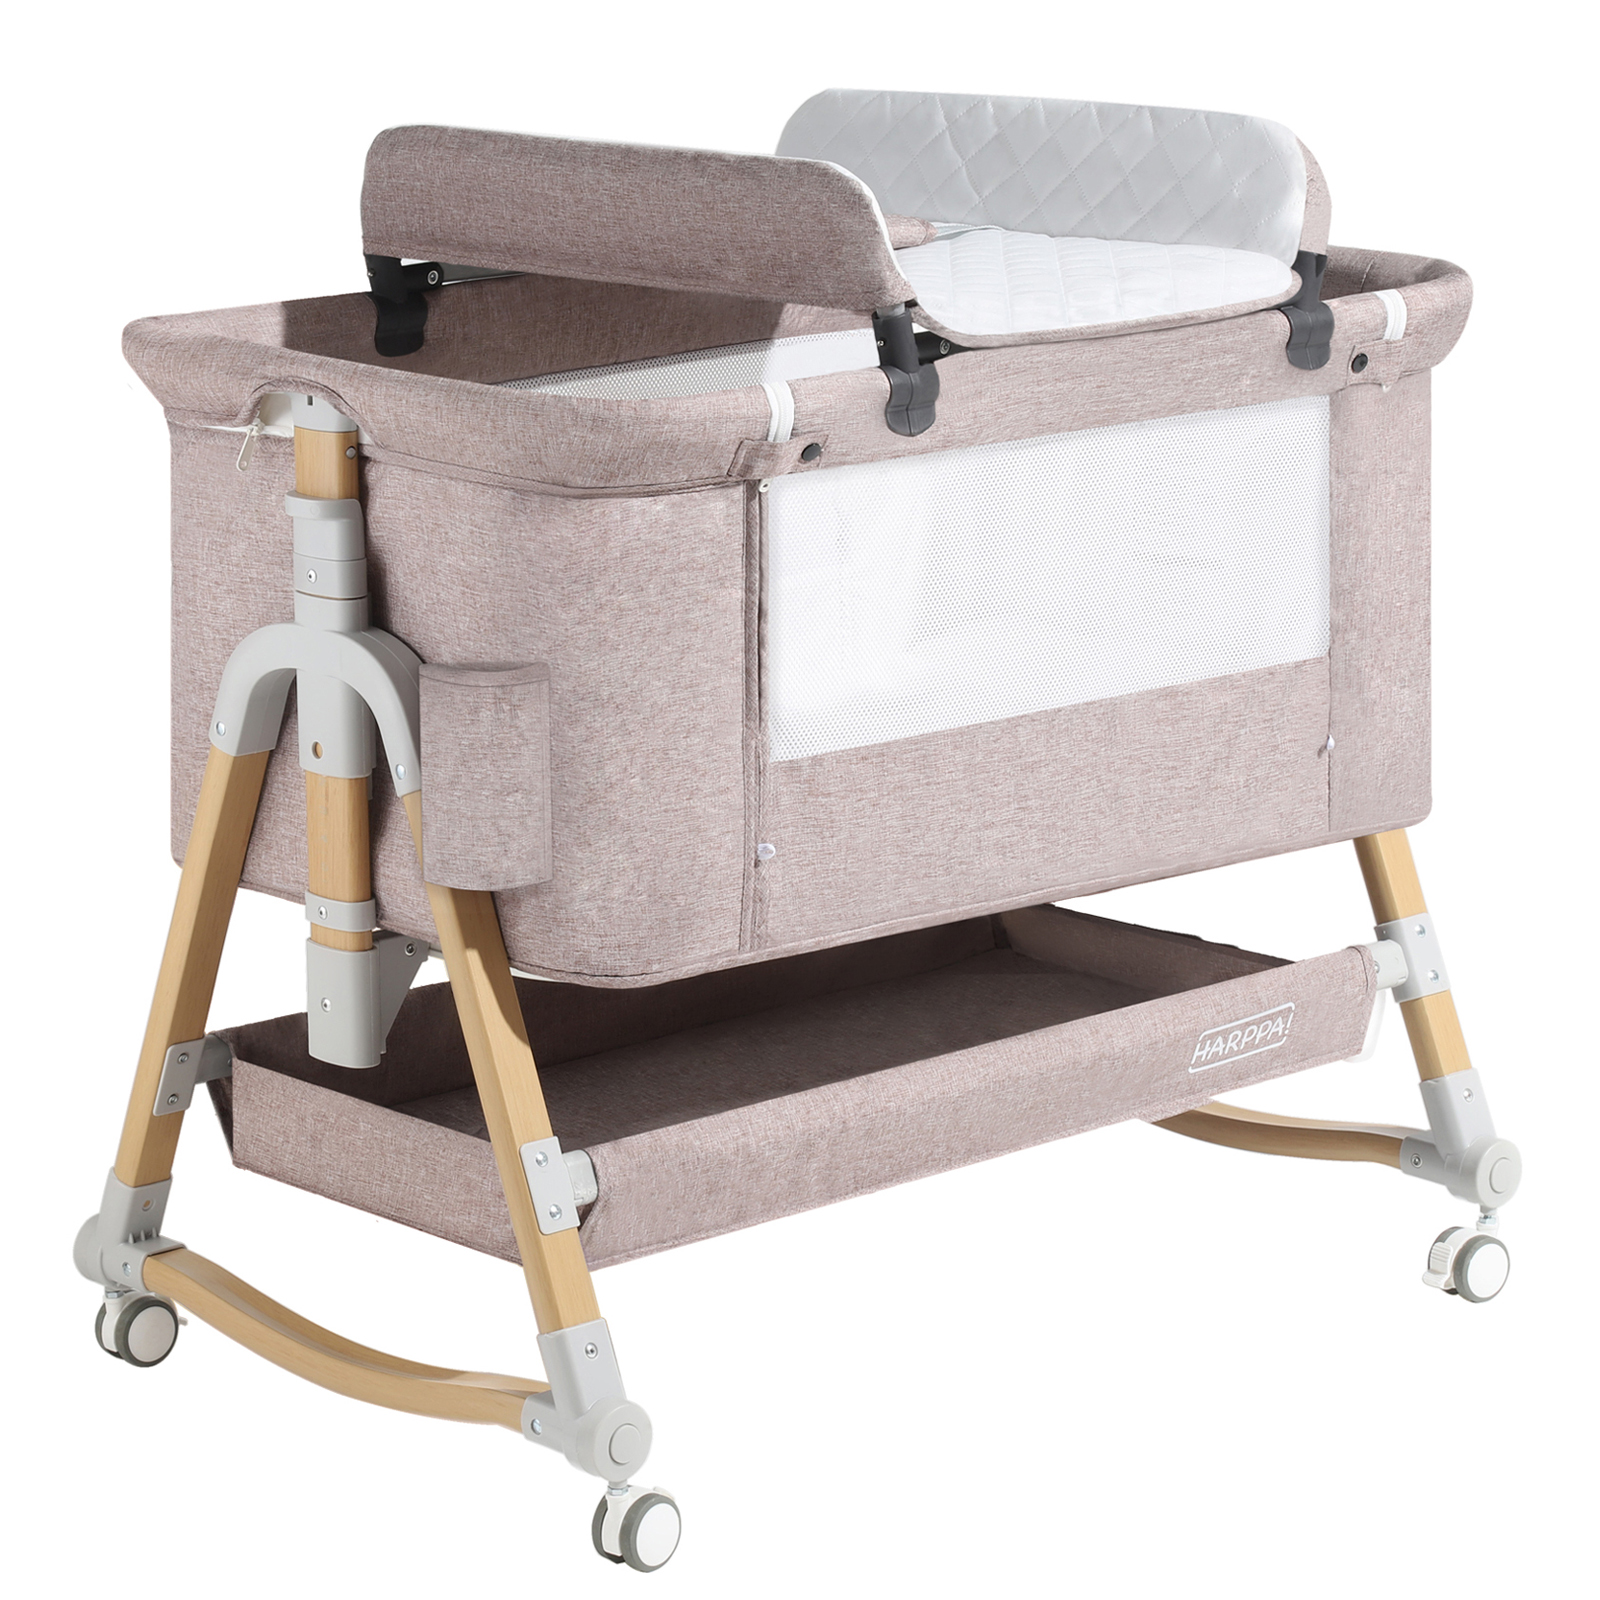 HARPPA 4 in 1 Baby Bassinet Bedside Sleeper, Height Adjustable, Easy Folding, Khaki - image 3 of 8